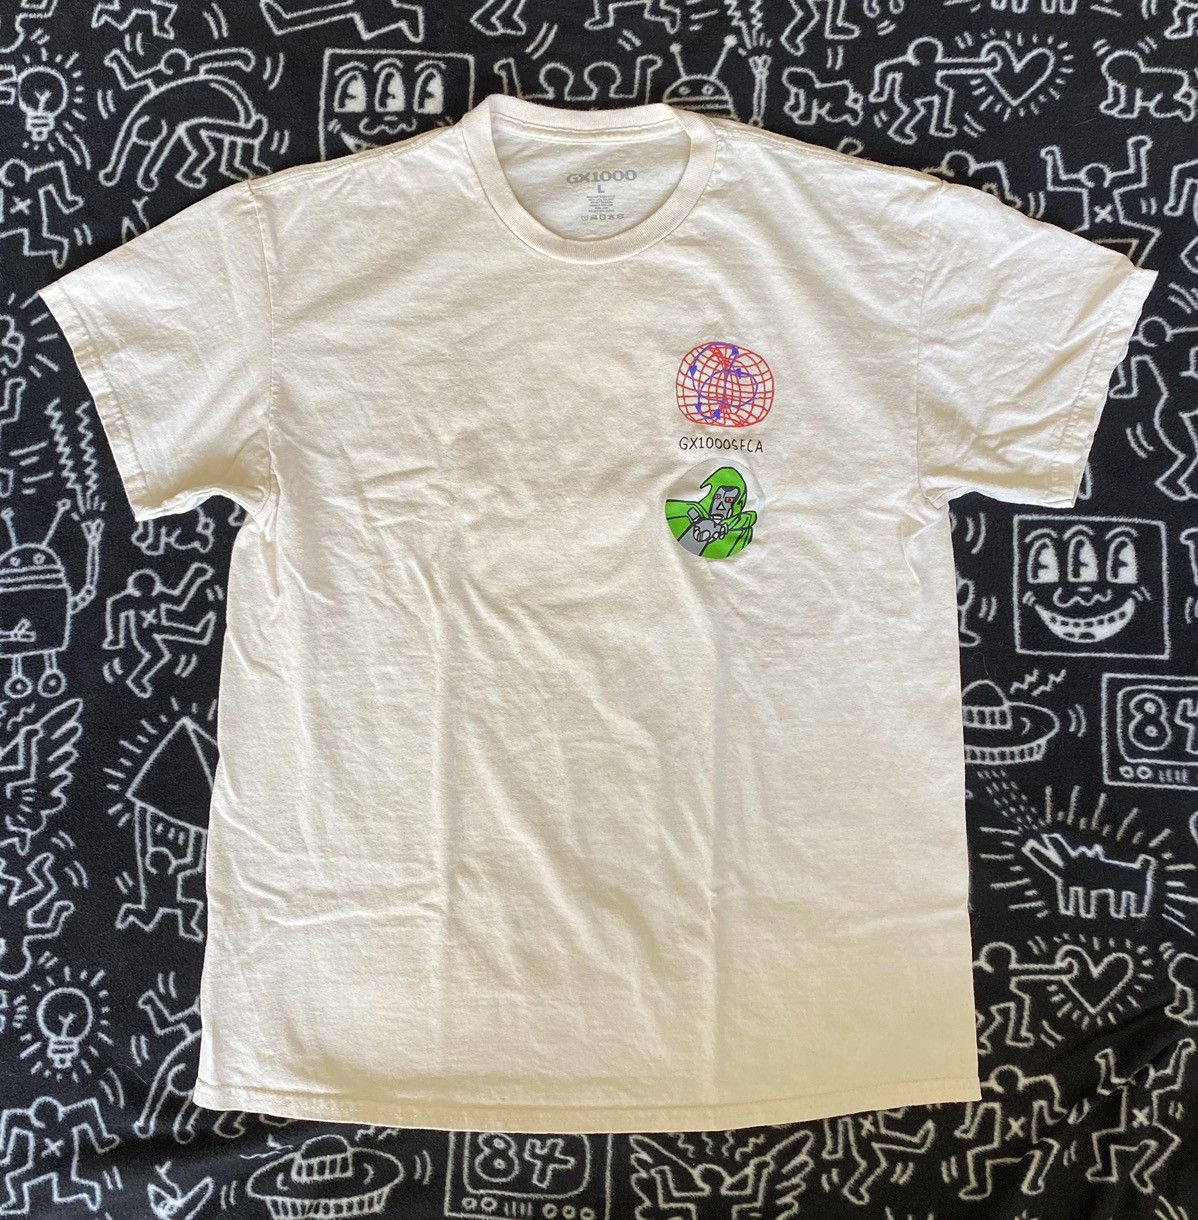 LSD World Peace Gx1000 MF Doom lsd worldpeace shirt | Grailed